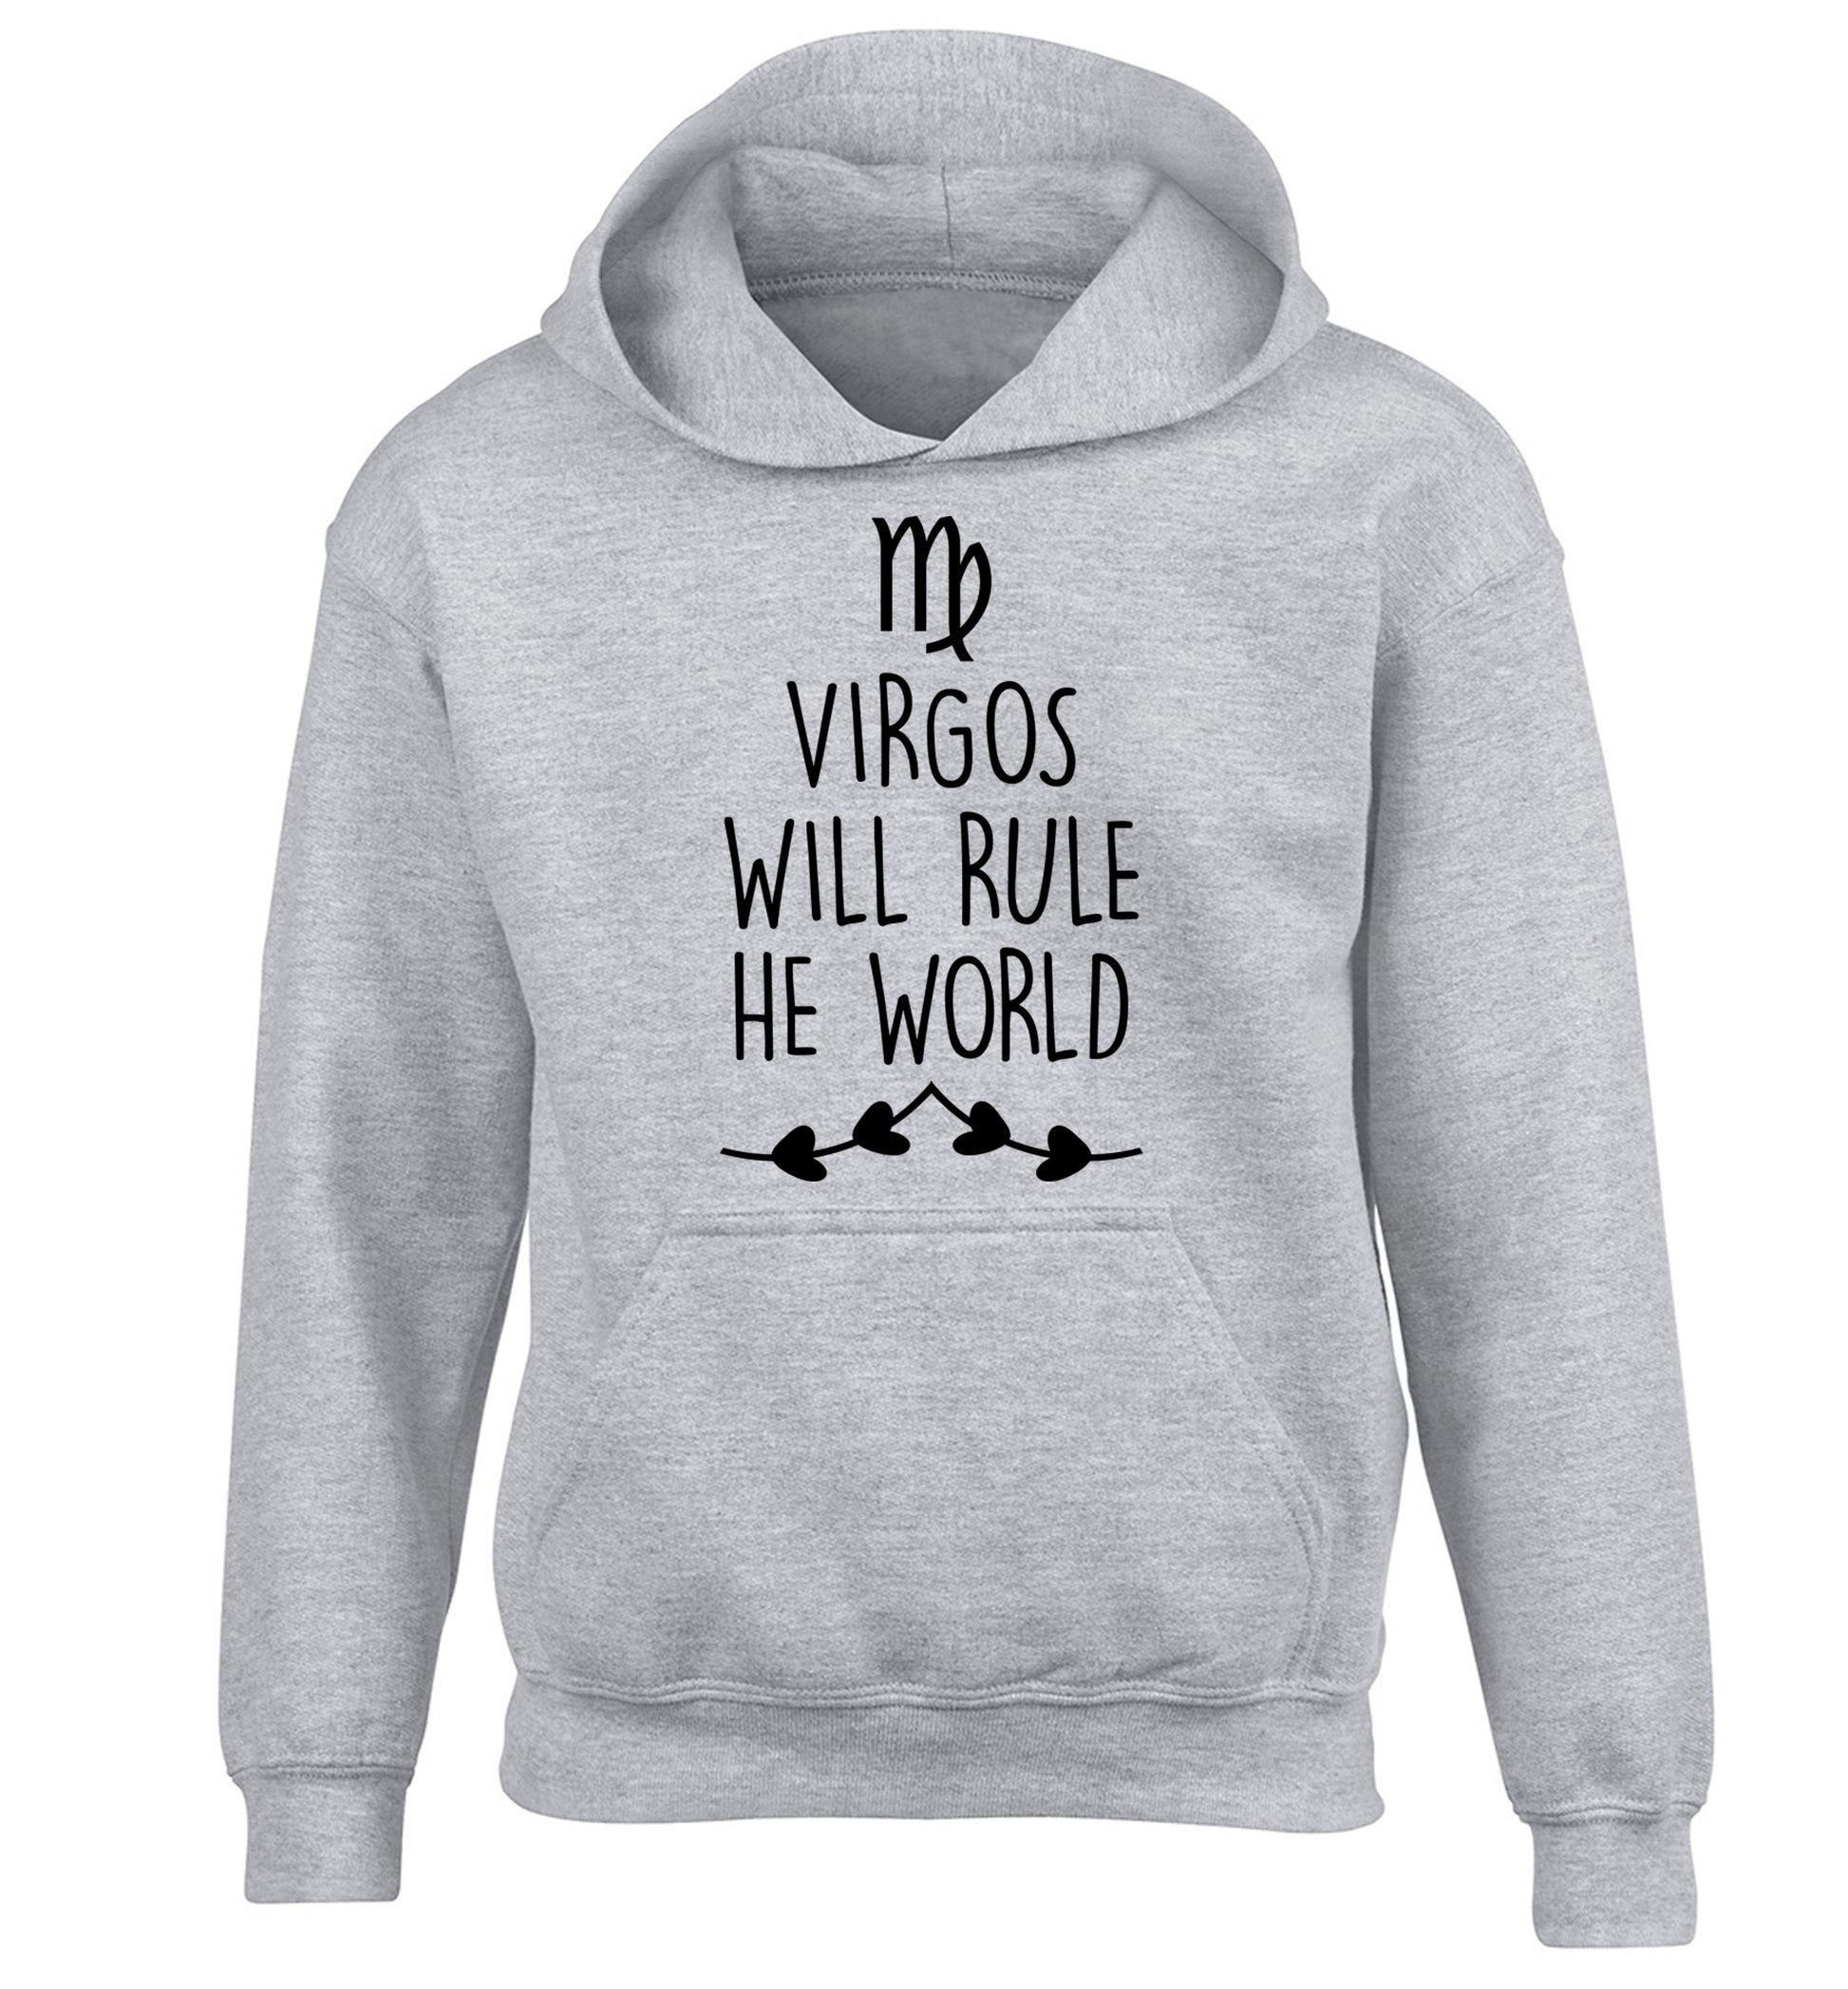 Virgos will rule the world children's grey hoodie 12-13 Years